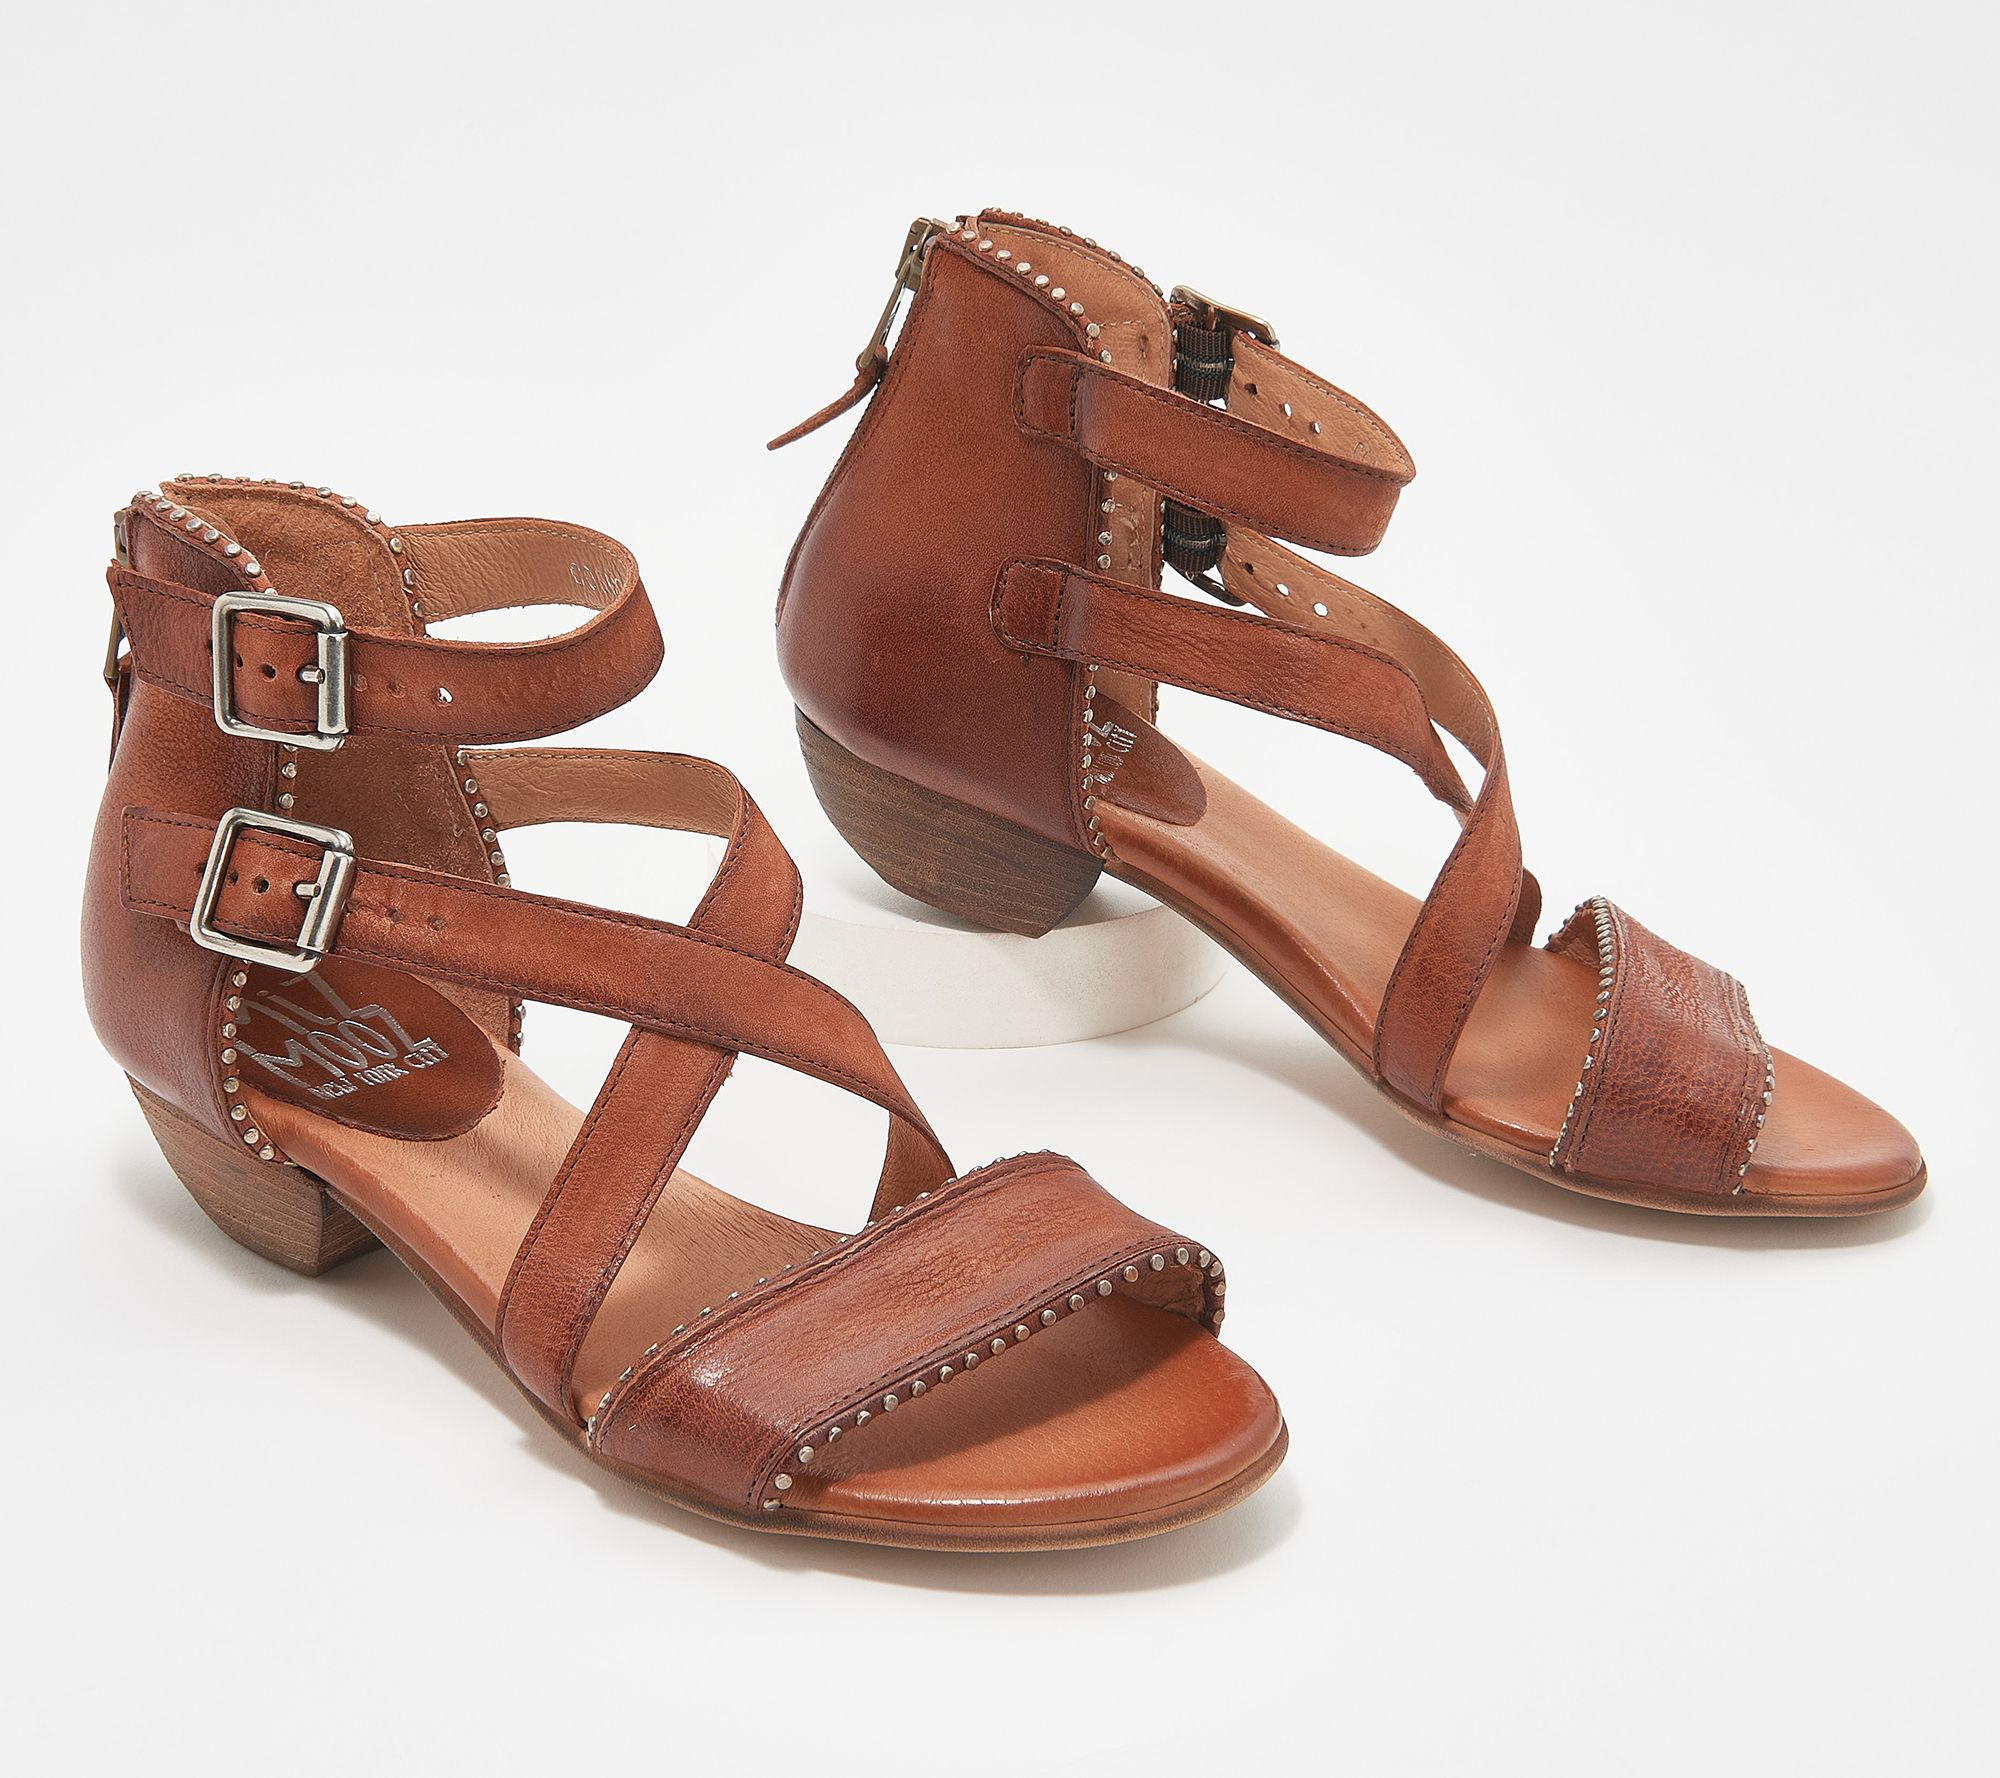 Miz Mooz Leather Studded Sandals - Cosmo - QVC.com